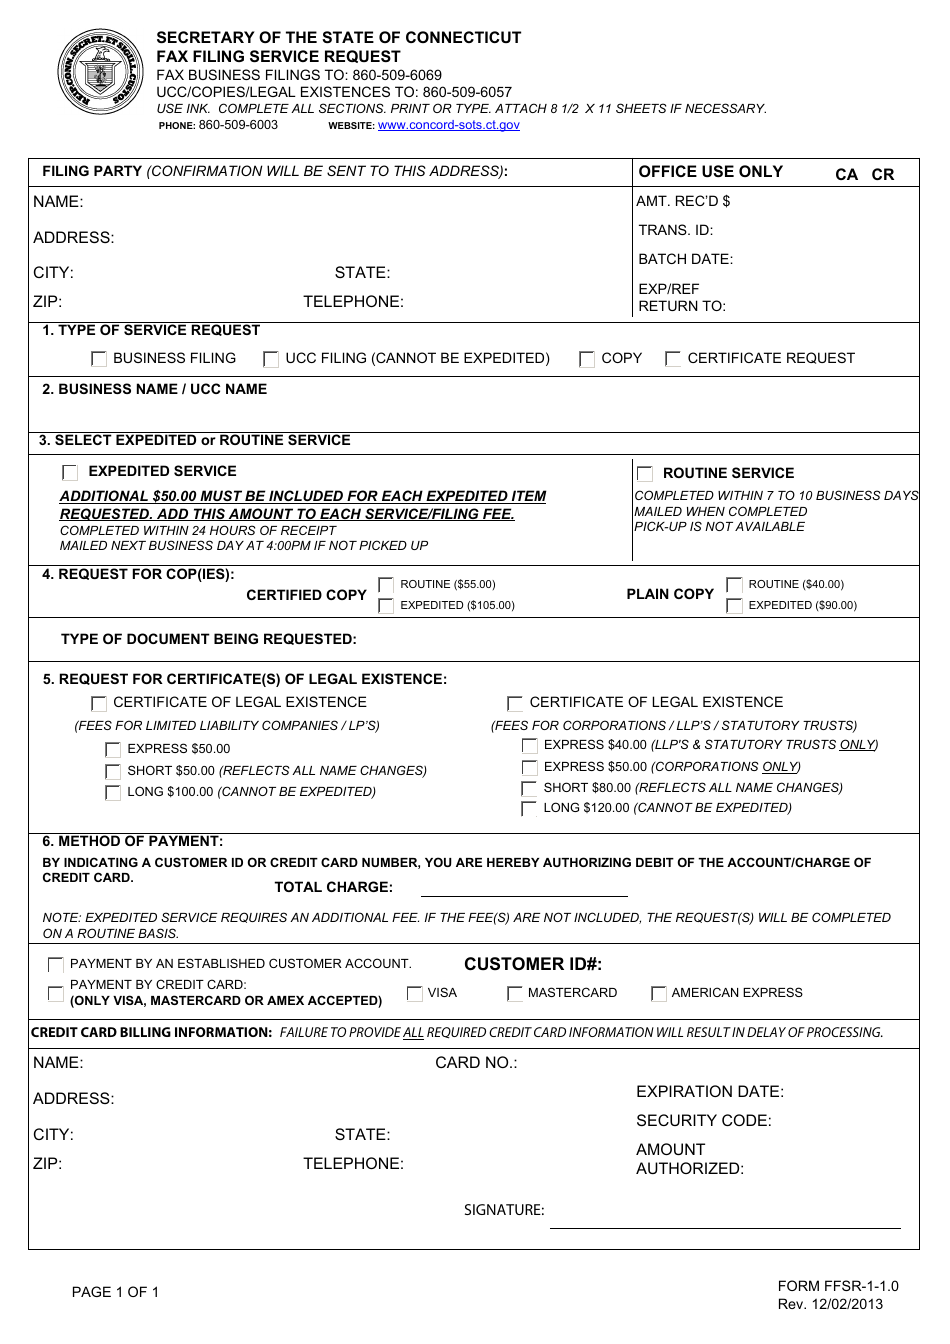 Form FFSR-1-1.0 Fax Filing Service Request - Connecticut, Page 1